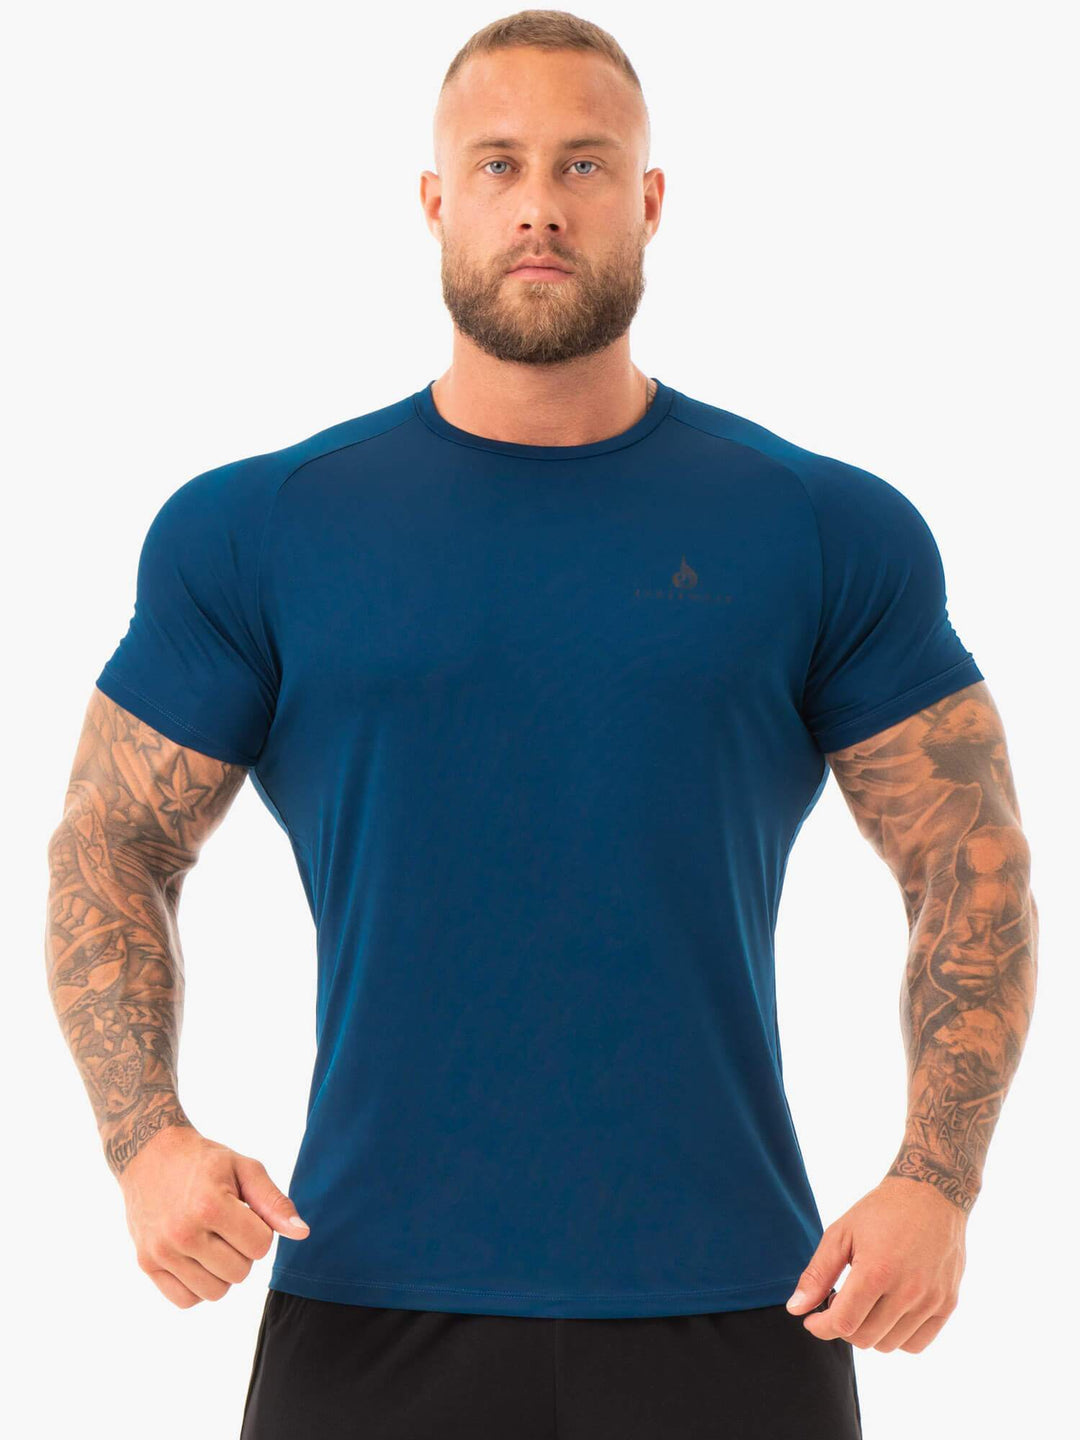 Breeze T-Shirt - Navy Clothing Ryderwear 